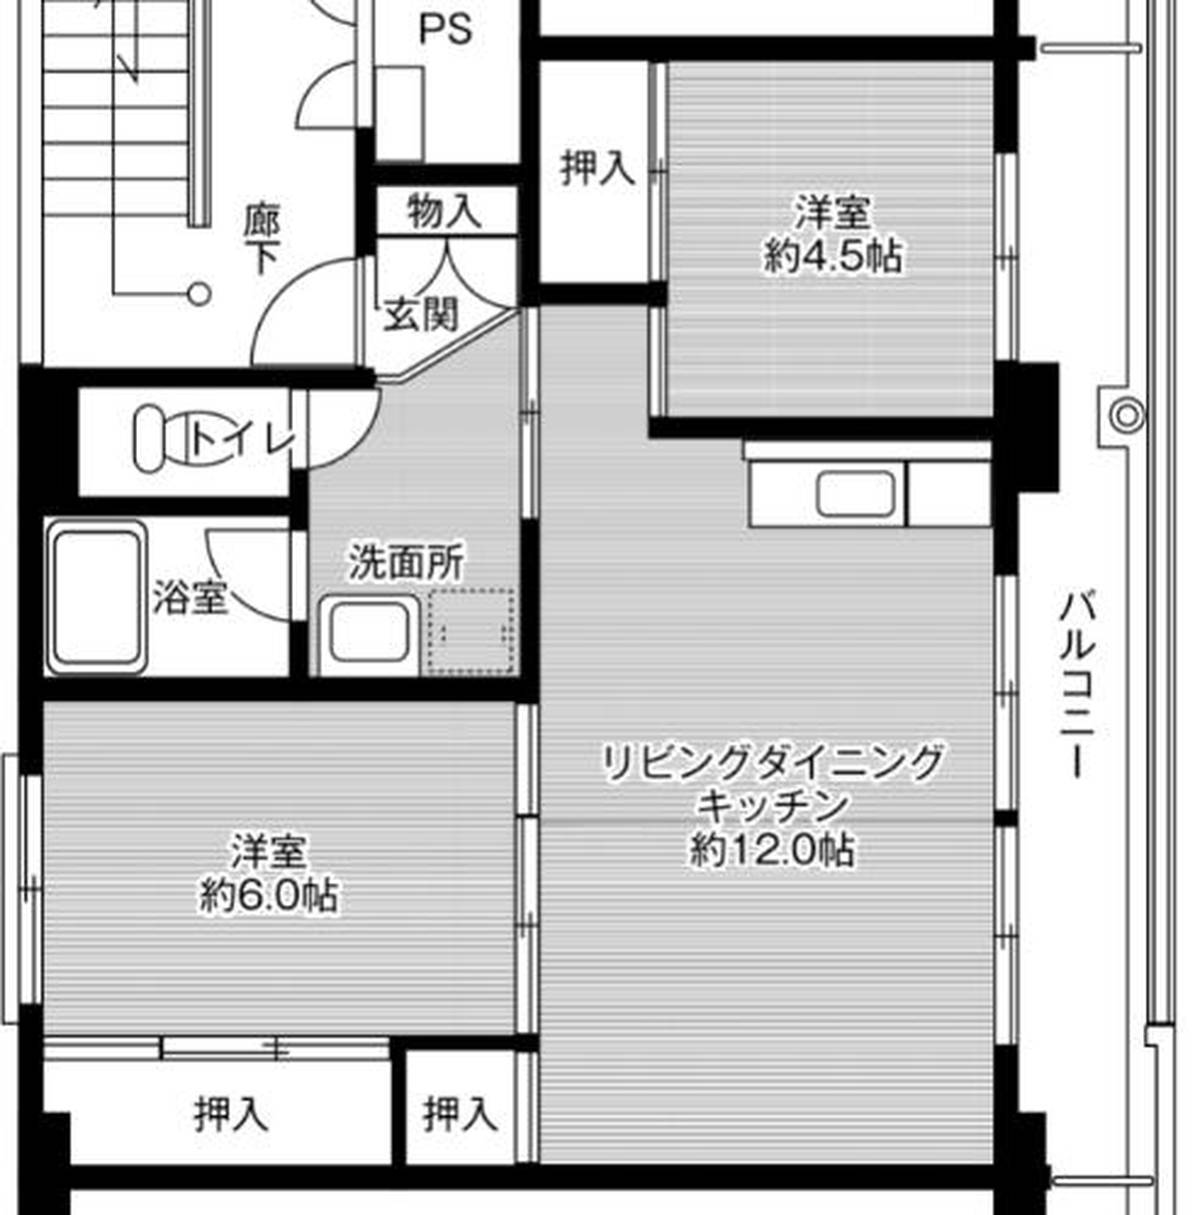 2LDK floorplan of Village House Kohama in Omuta-shi